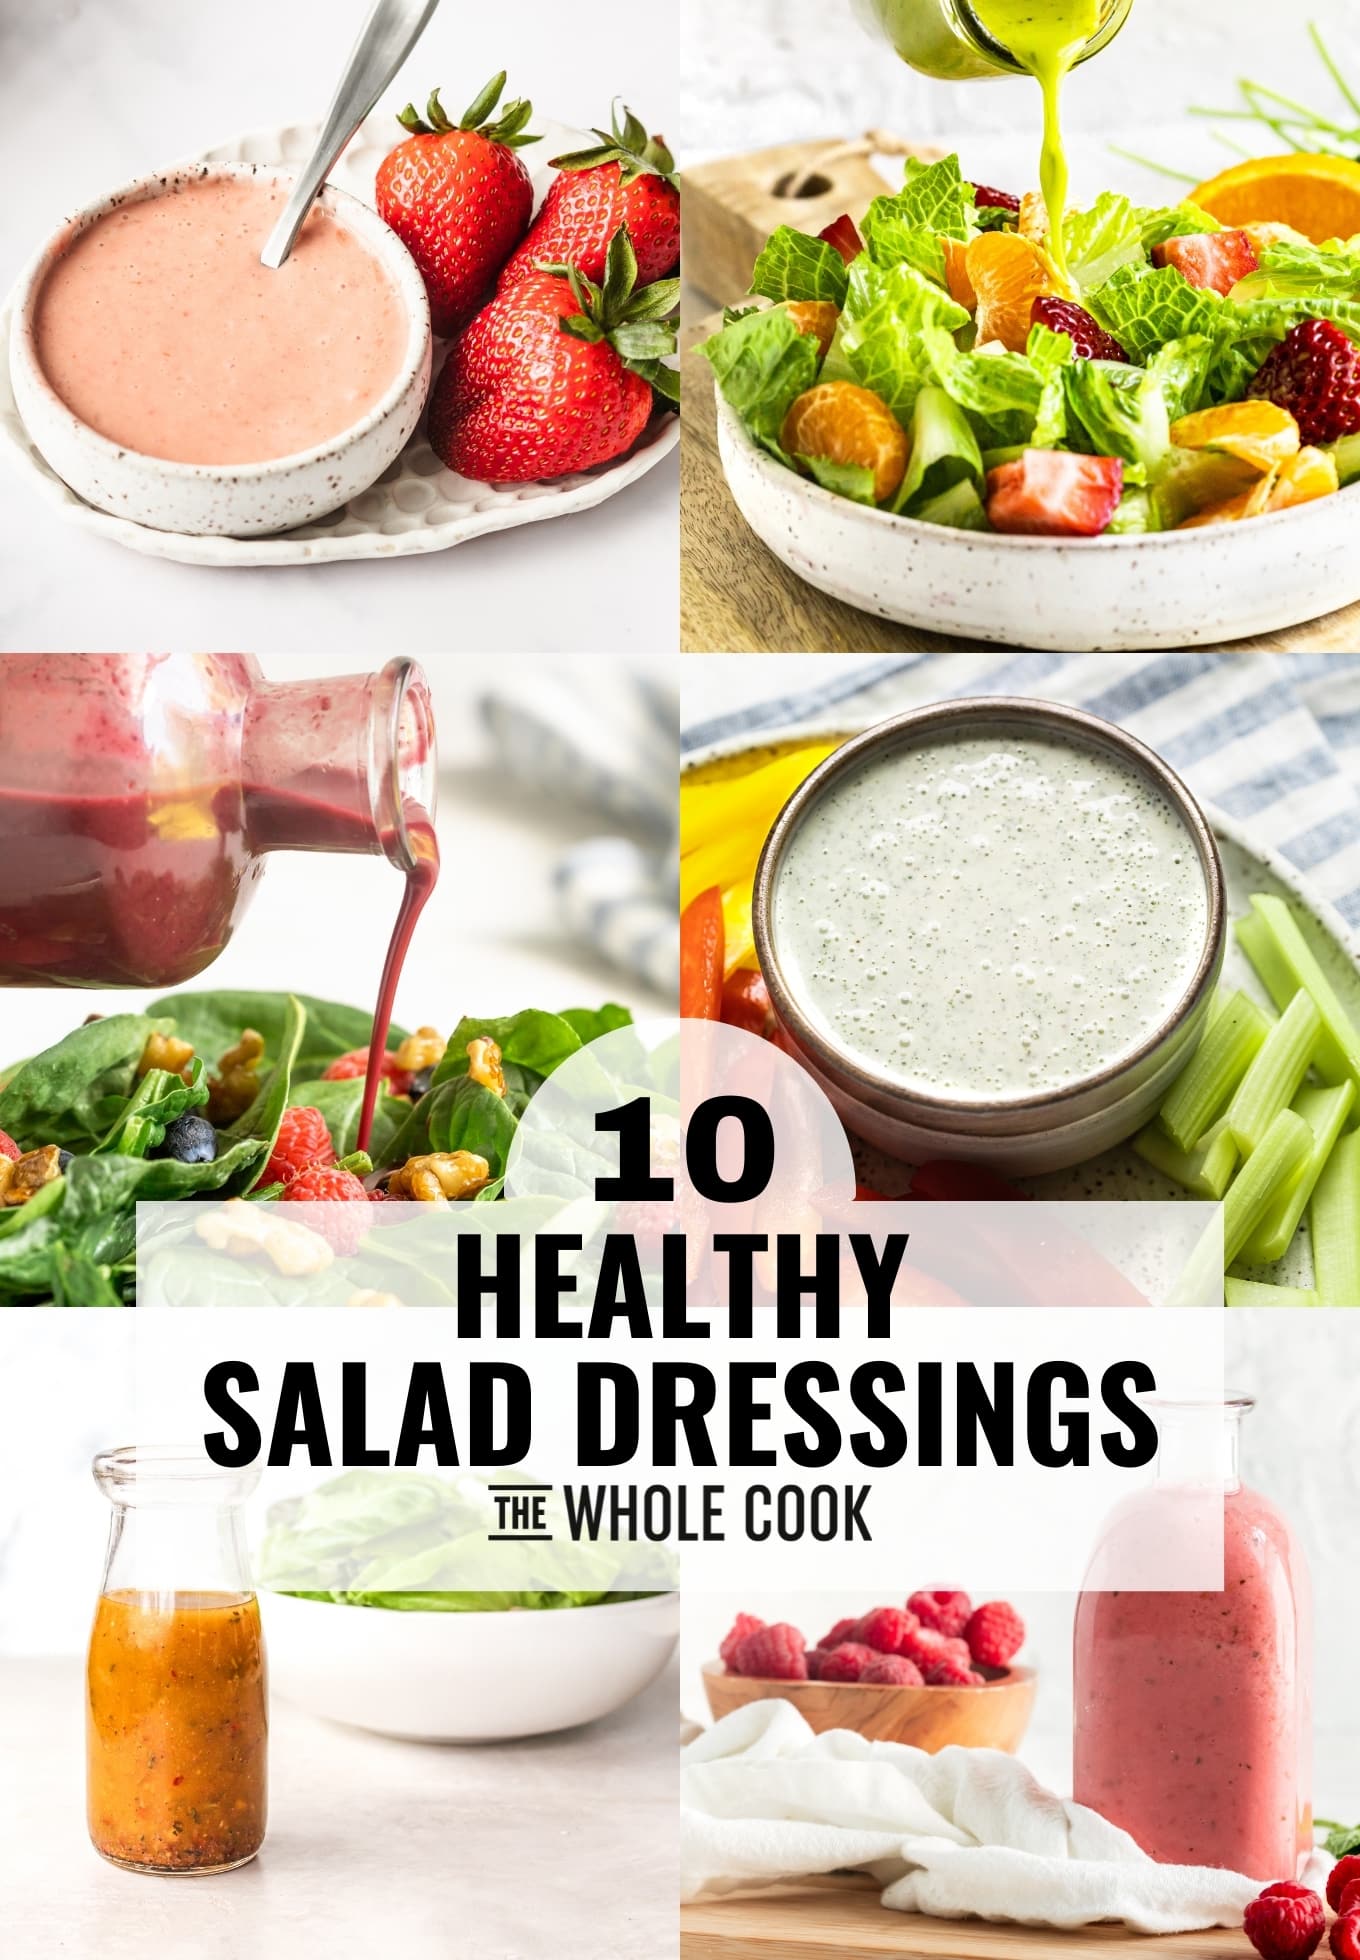 5 Whole30 Salad Dressing Recipes (Paleo, Keto, Vegan)